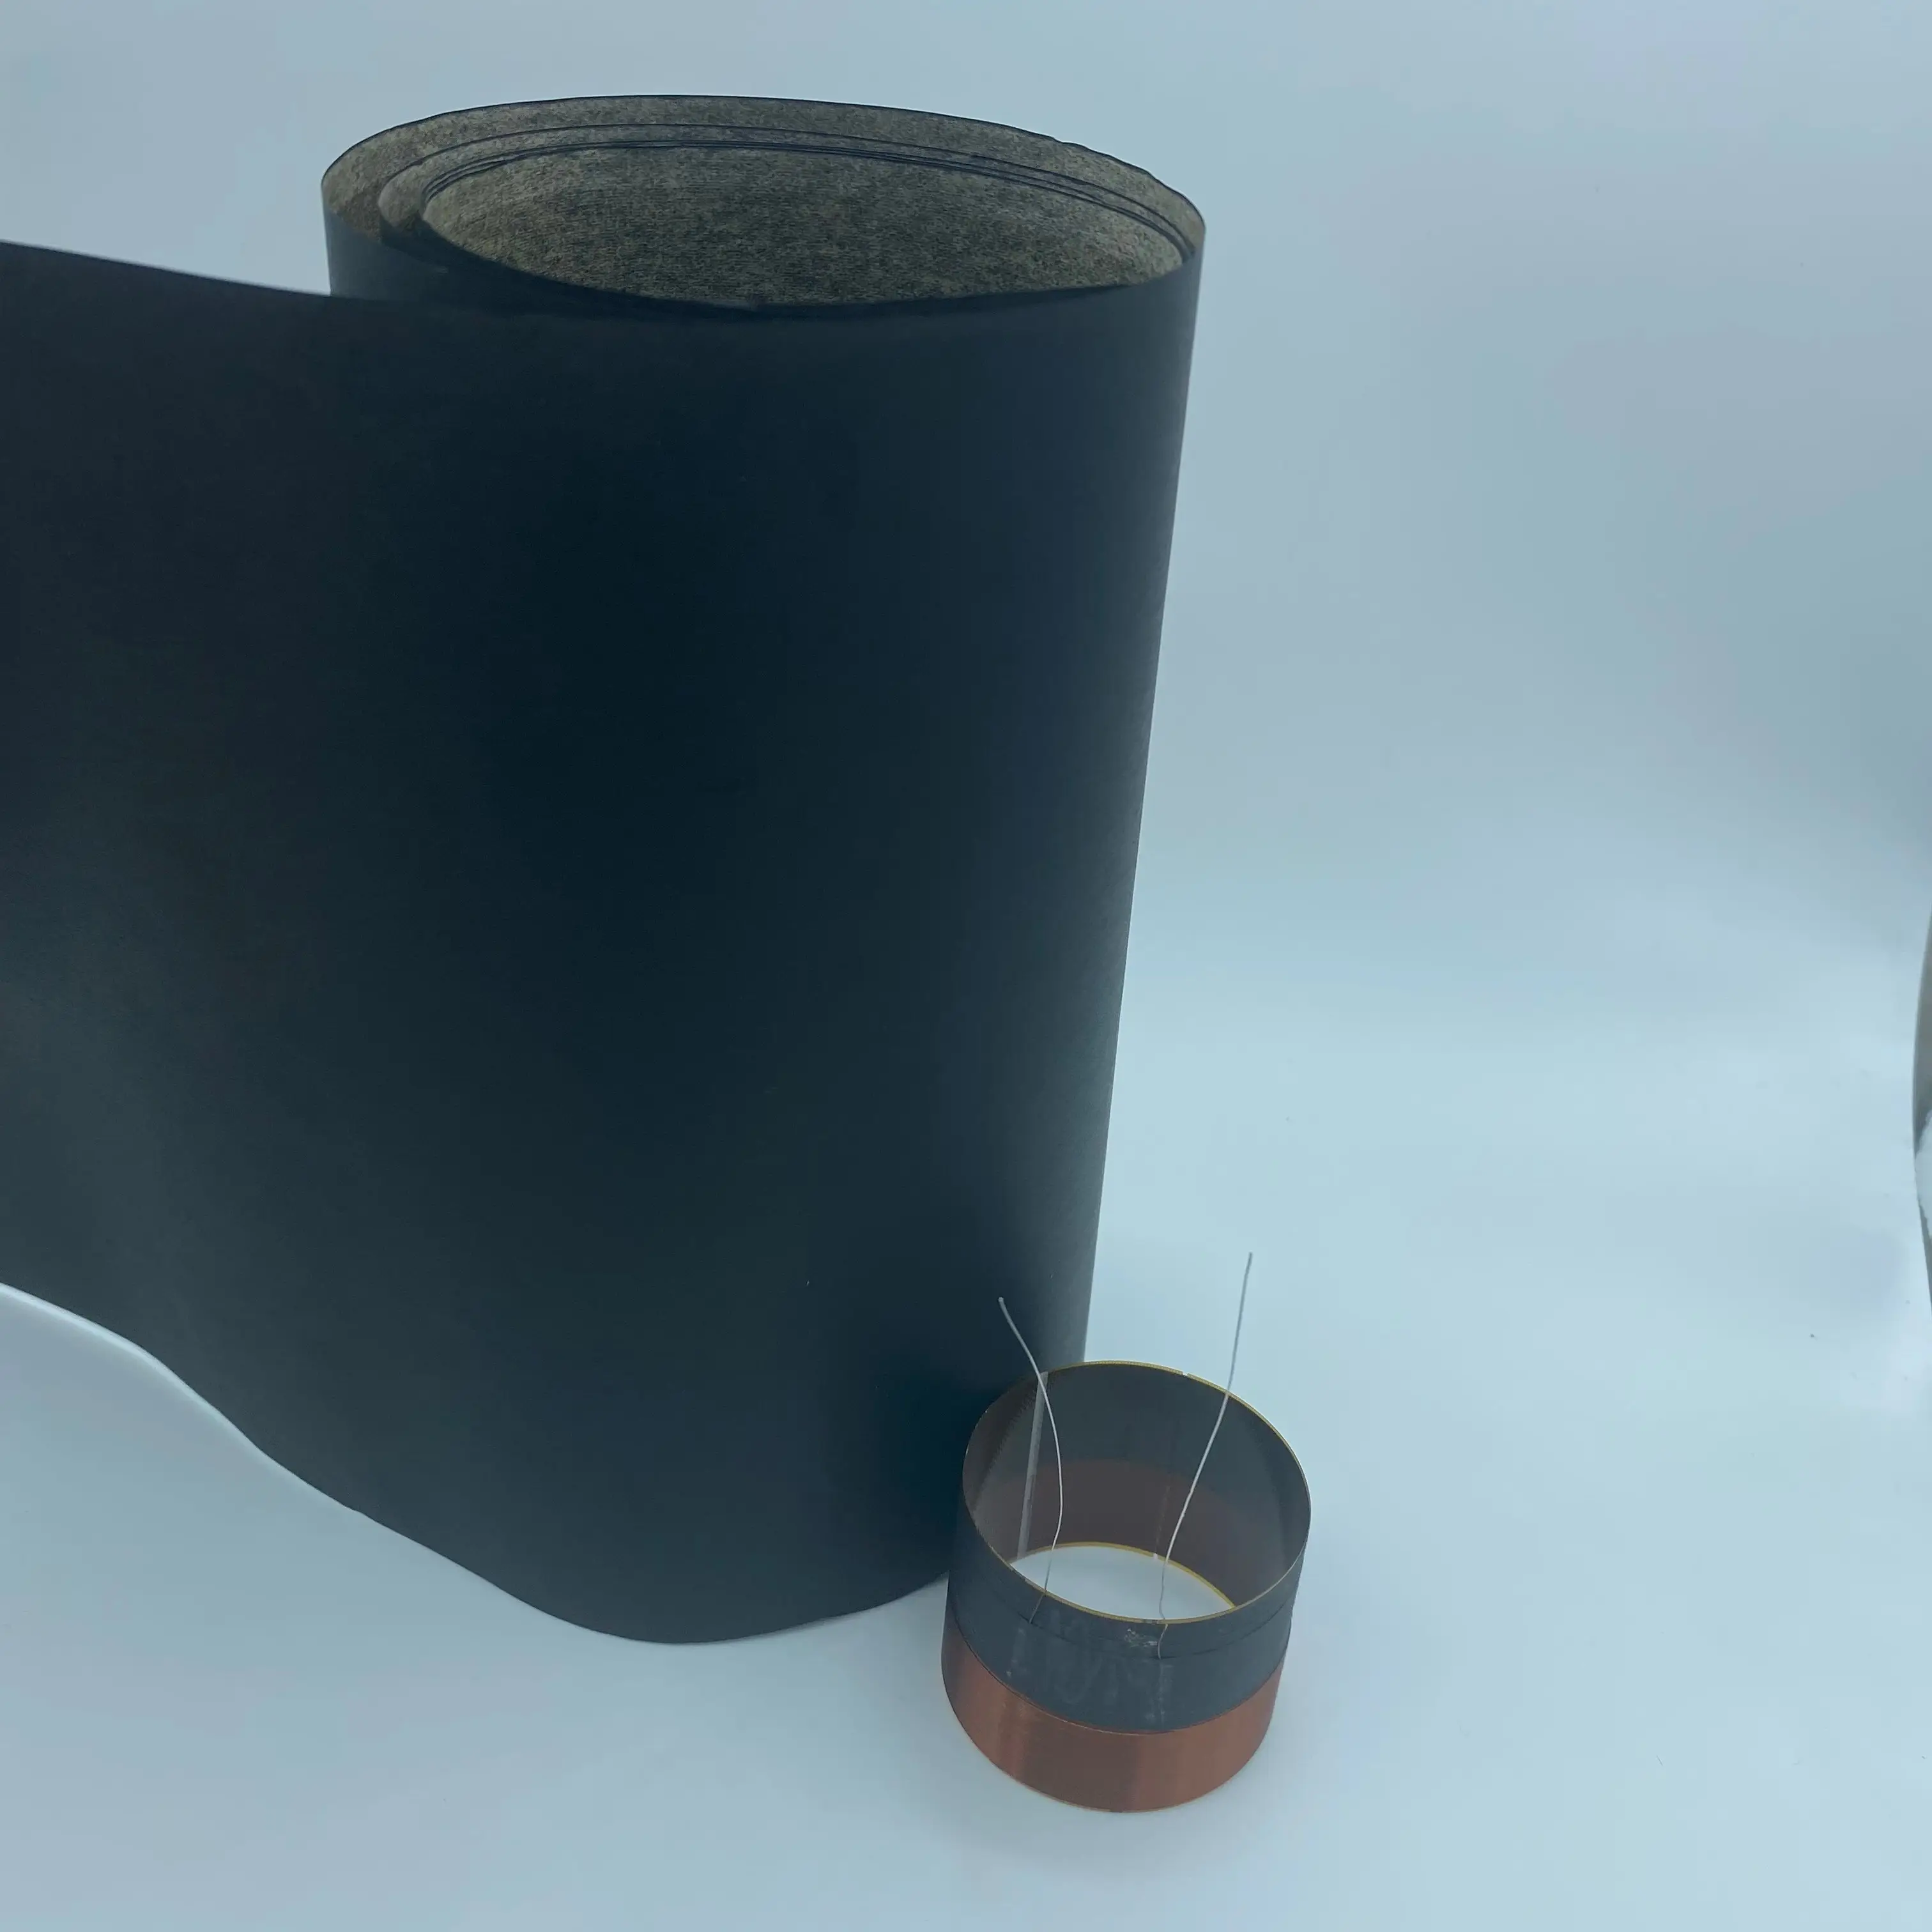 Speaker Accessories Black kraft paper 0.04mm voice coil material lock/glue